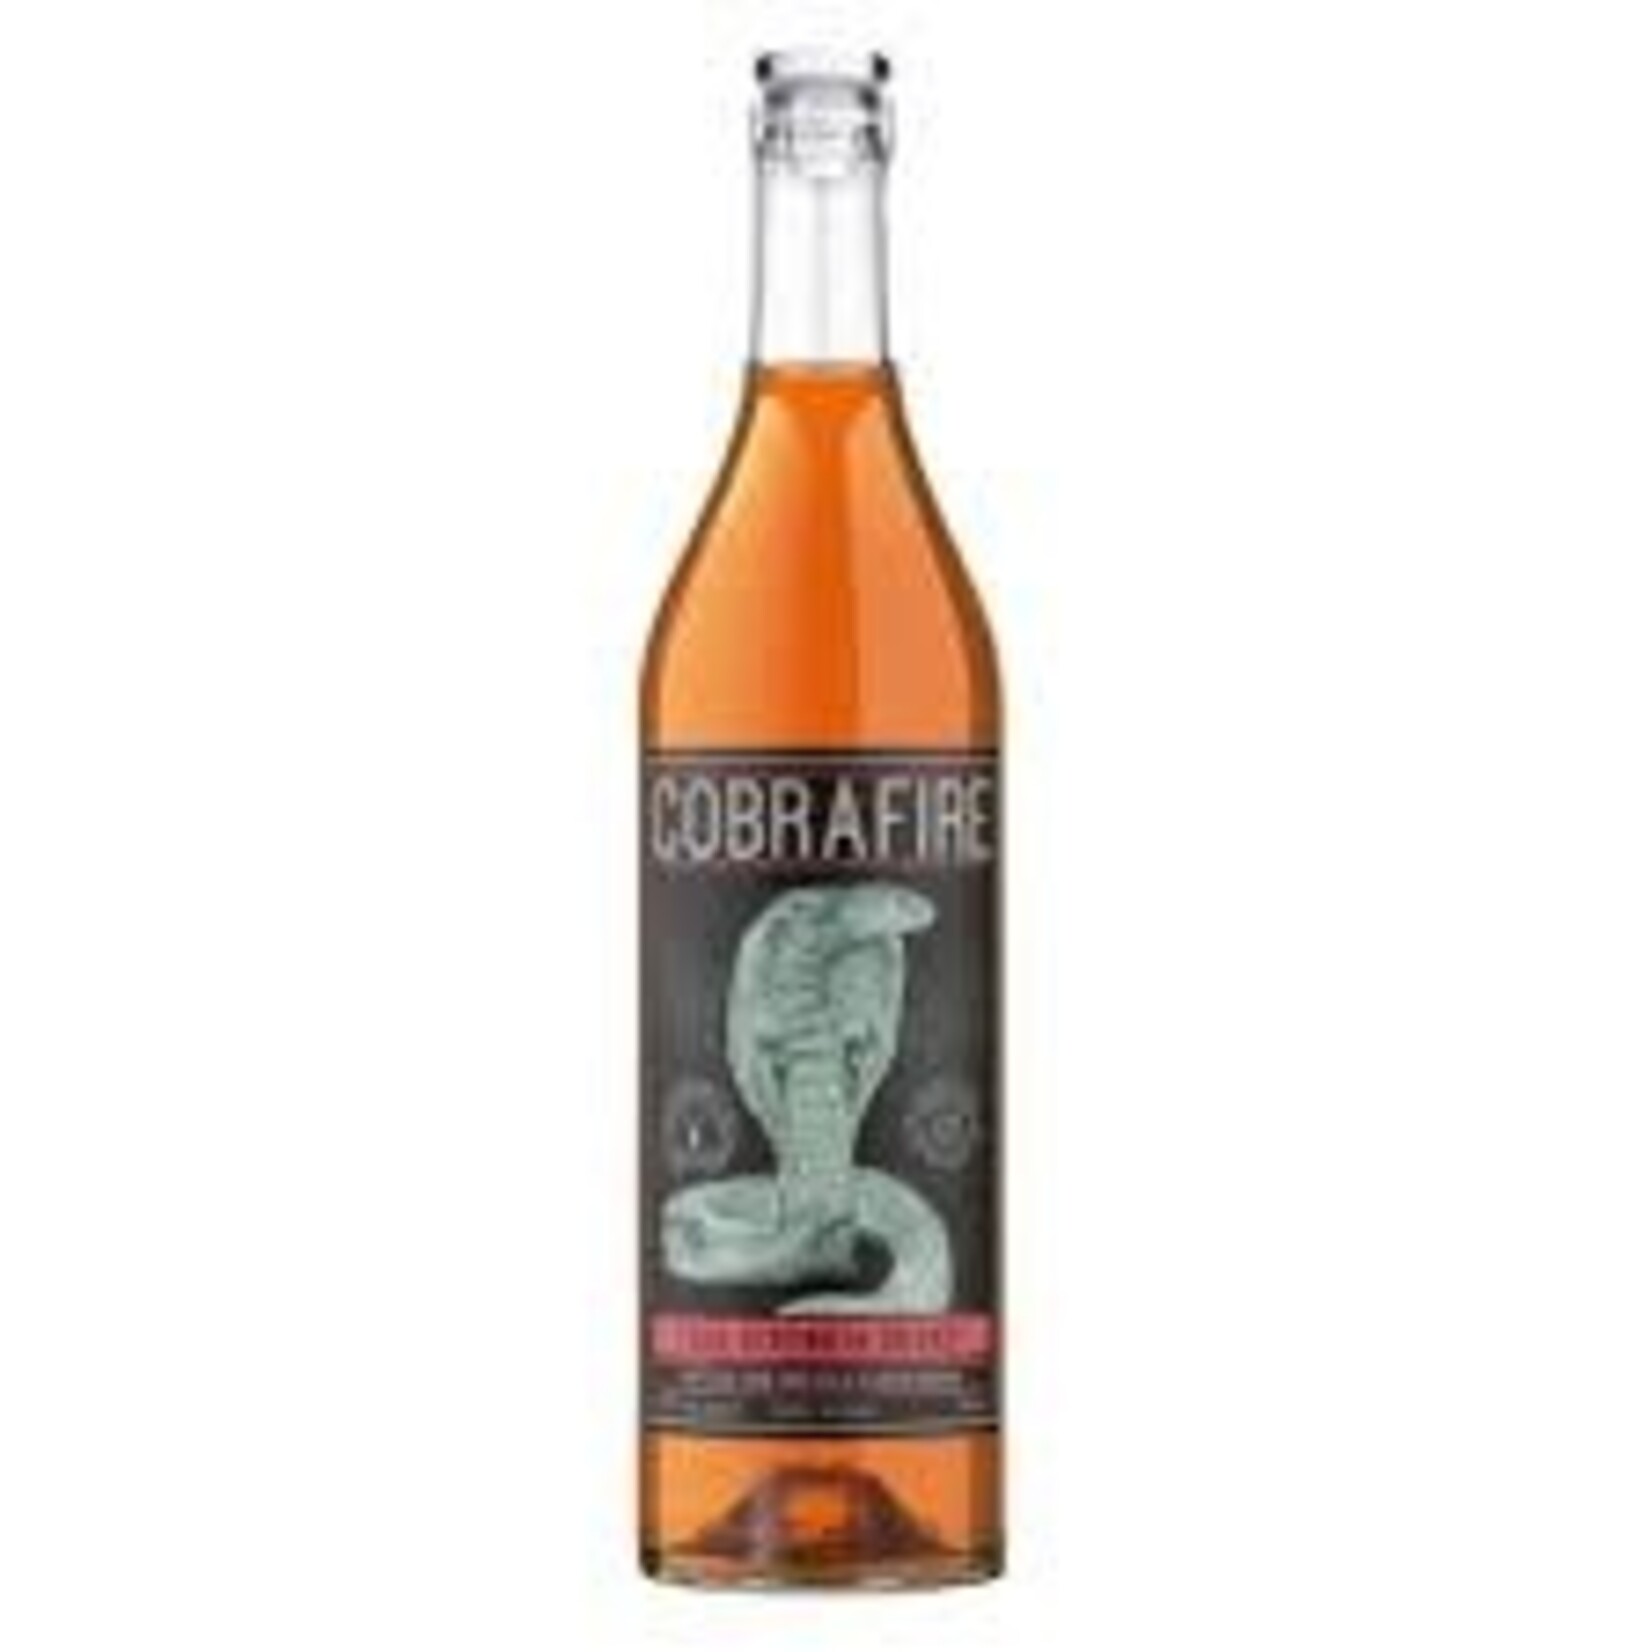 Cobrafire, Evil Force Cask Strength Brandy 750mL